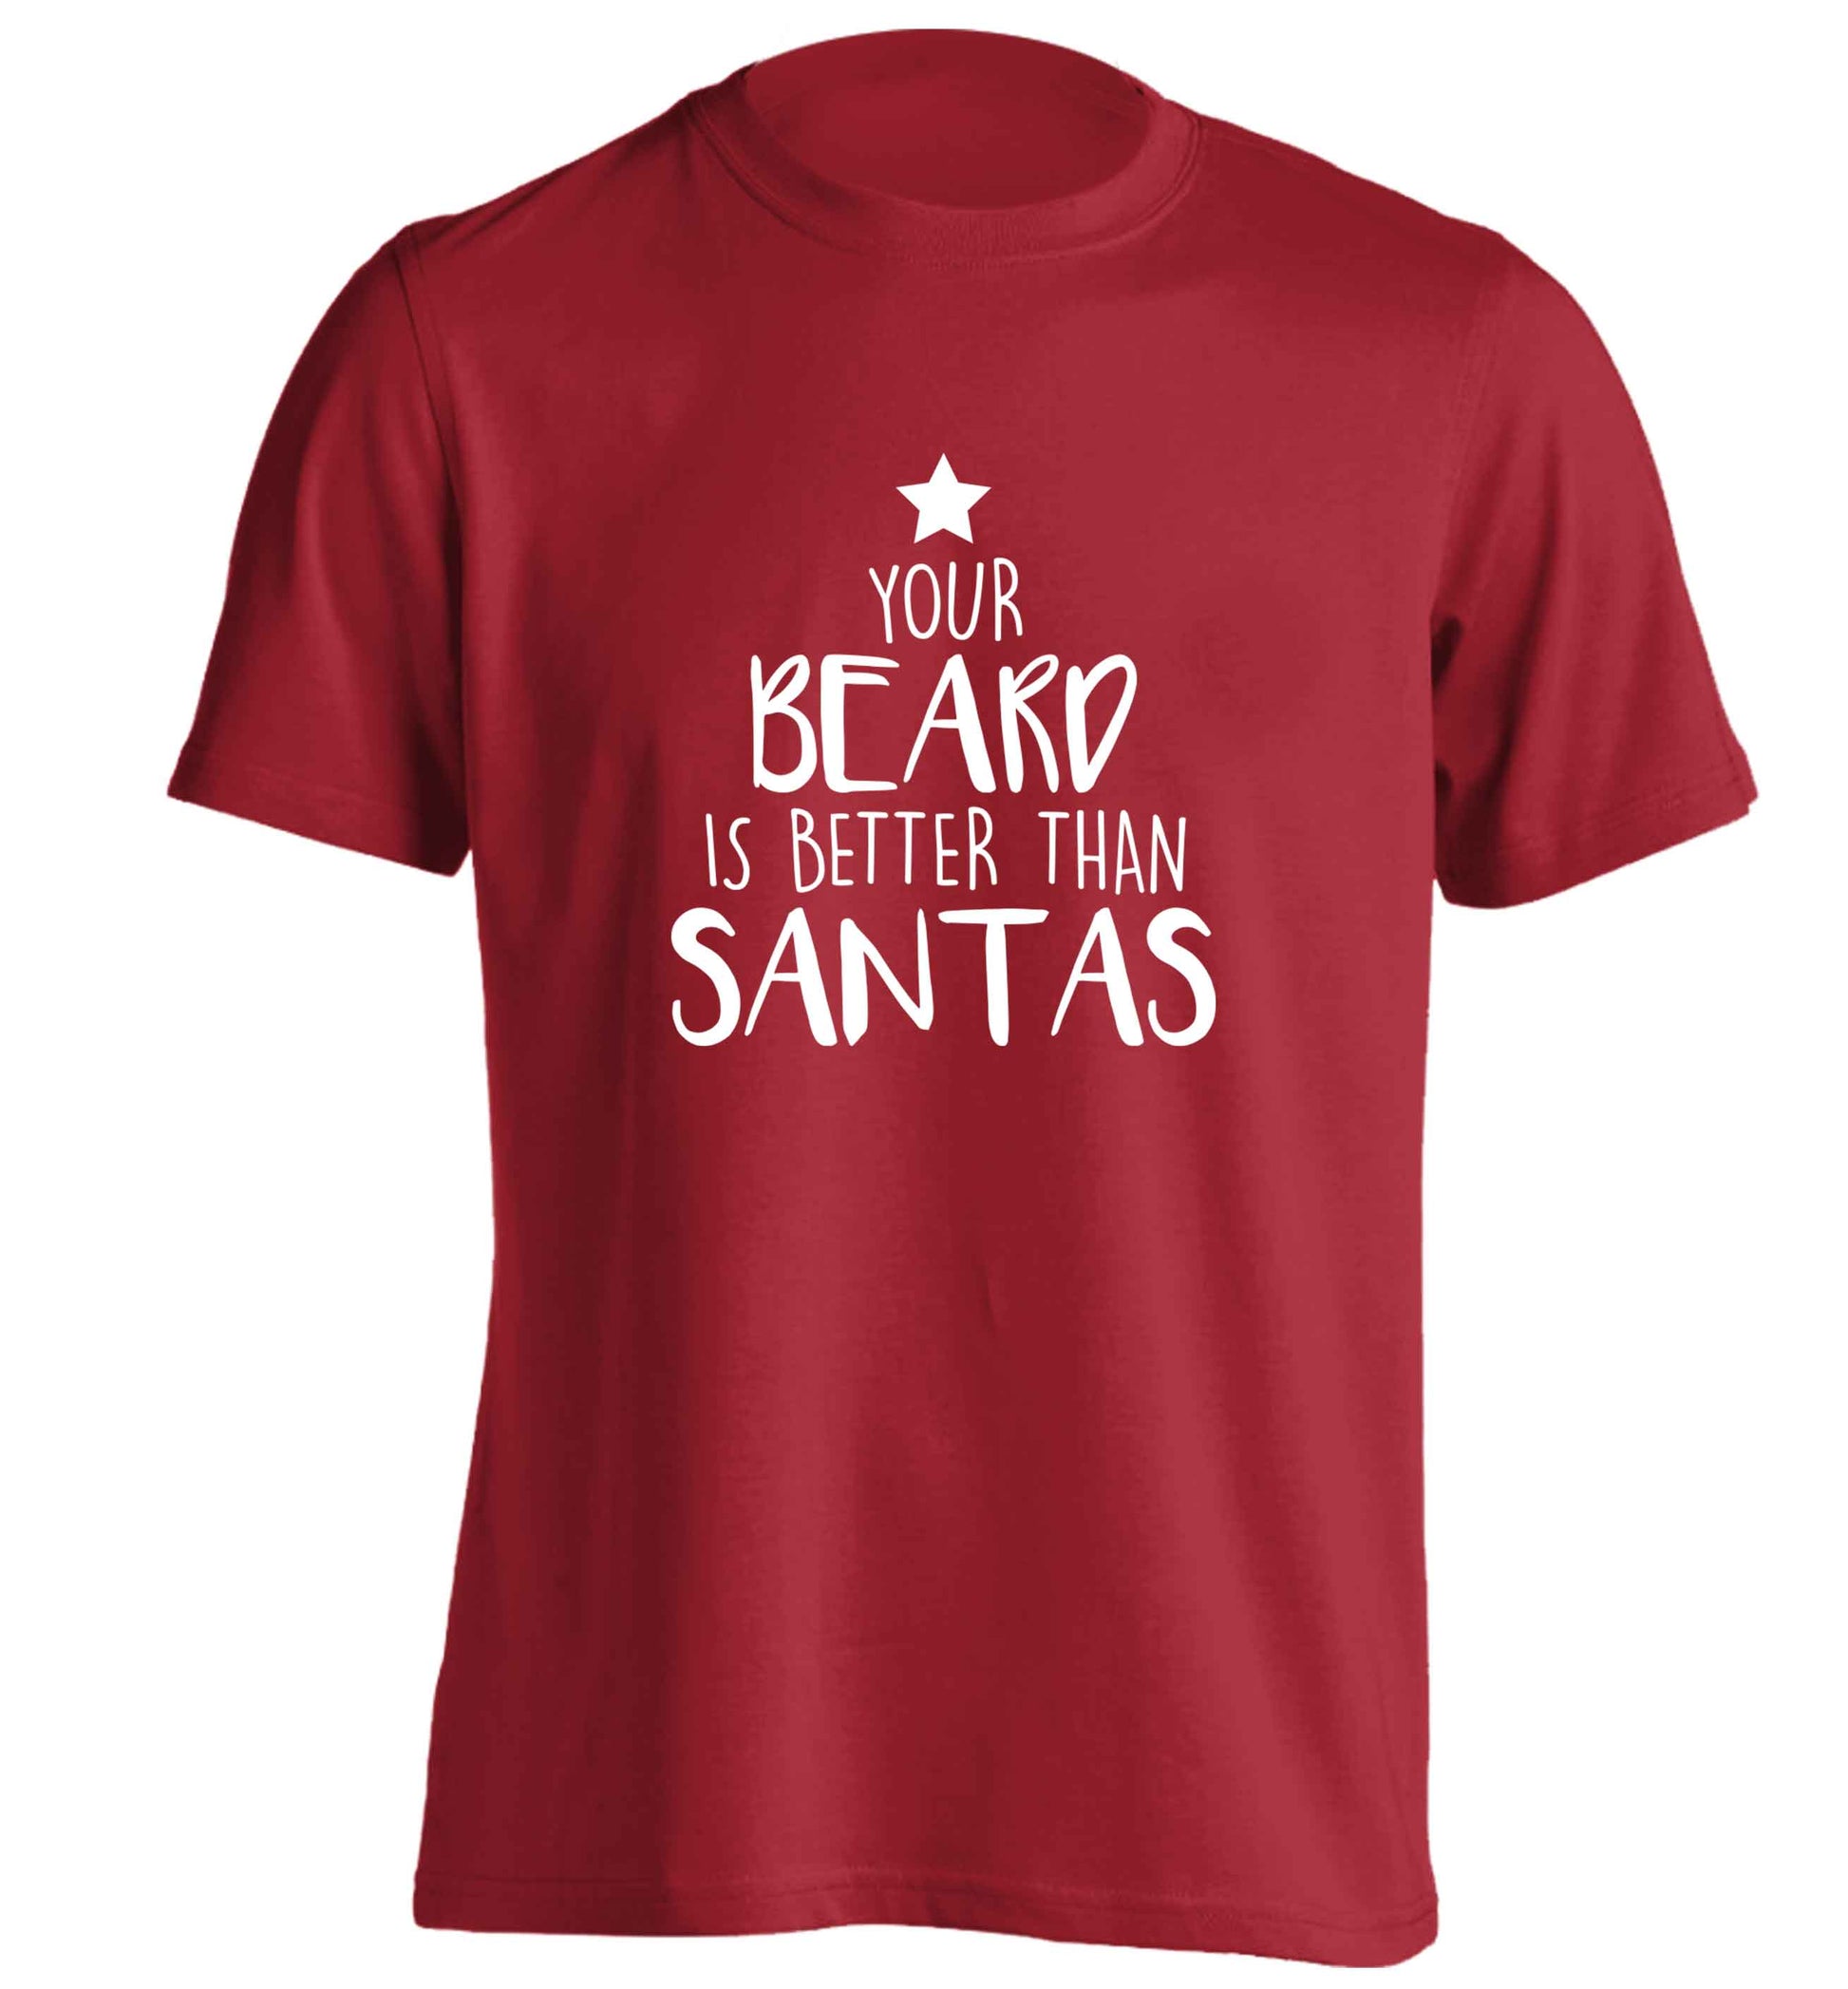 Your Beard Better than Santas adults unisex red Tshirt 2XL